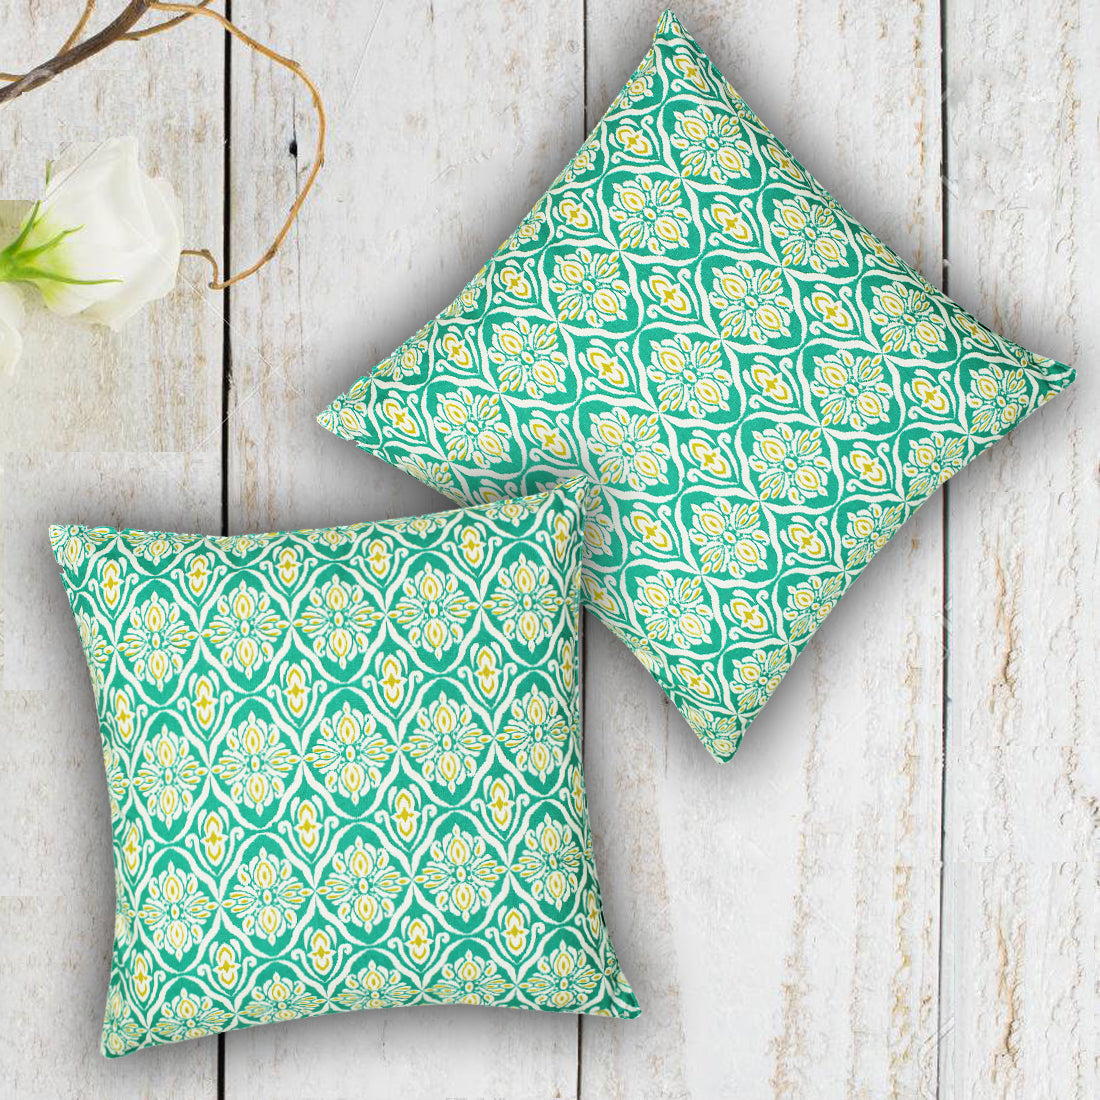 Soft Ikat print Aqua Cotton Cushion Cover Set online in India